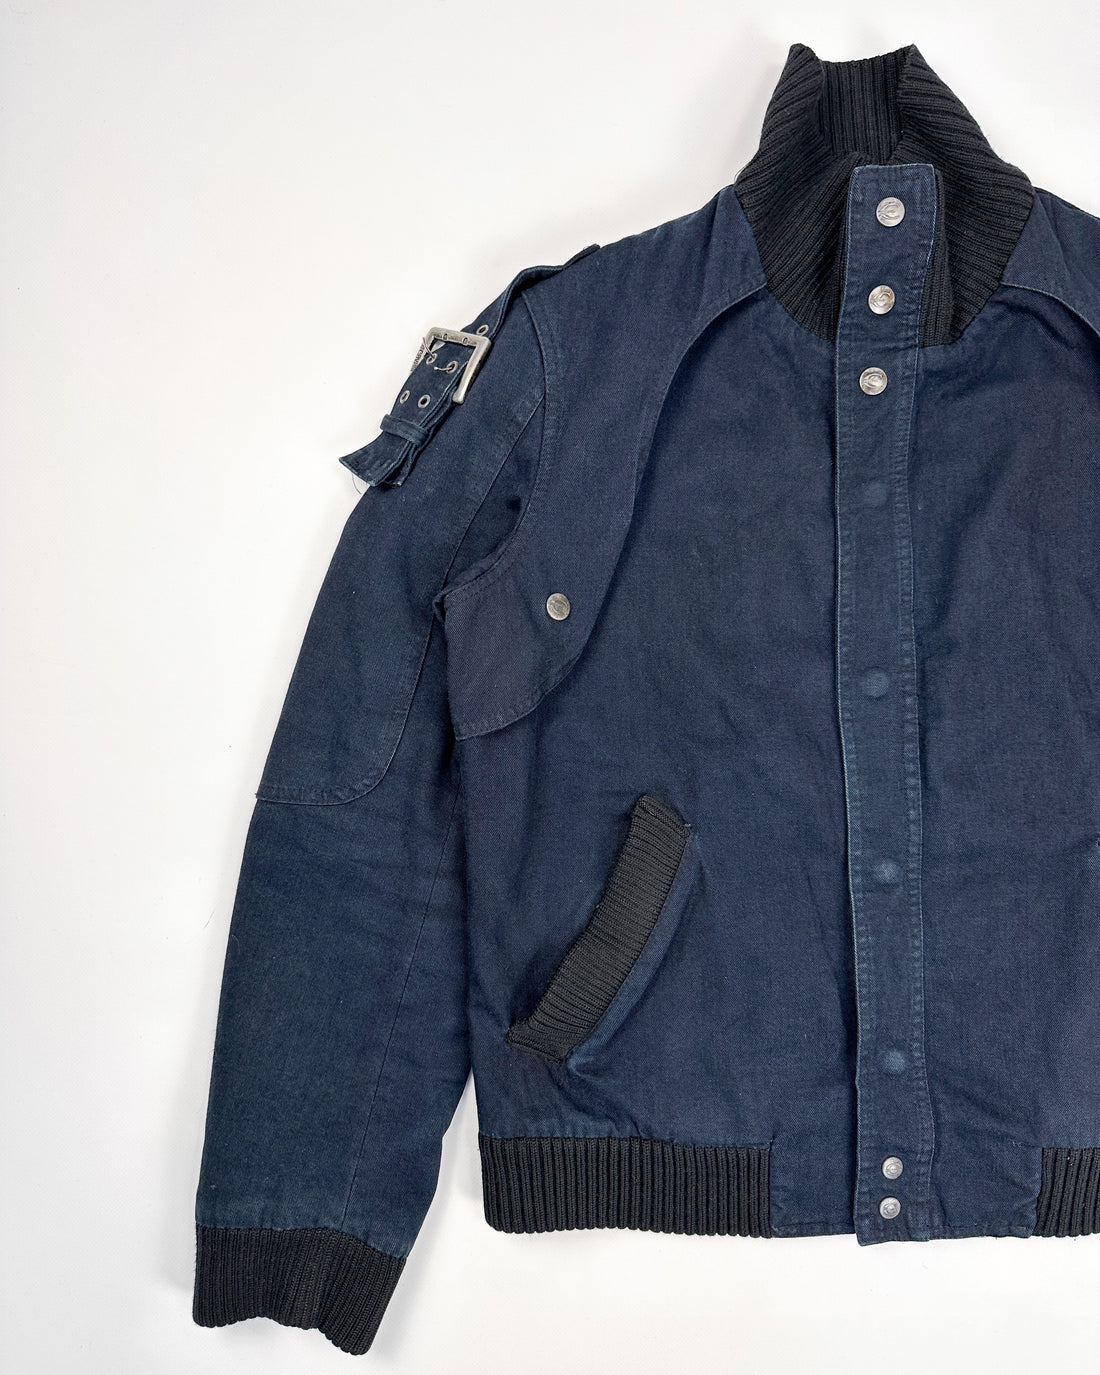 Just Cavalli Navy Blue Belted Jacket 1990's